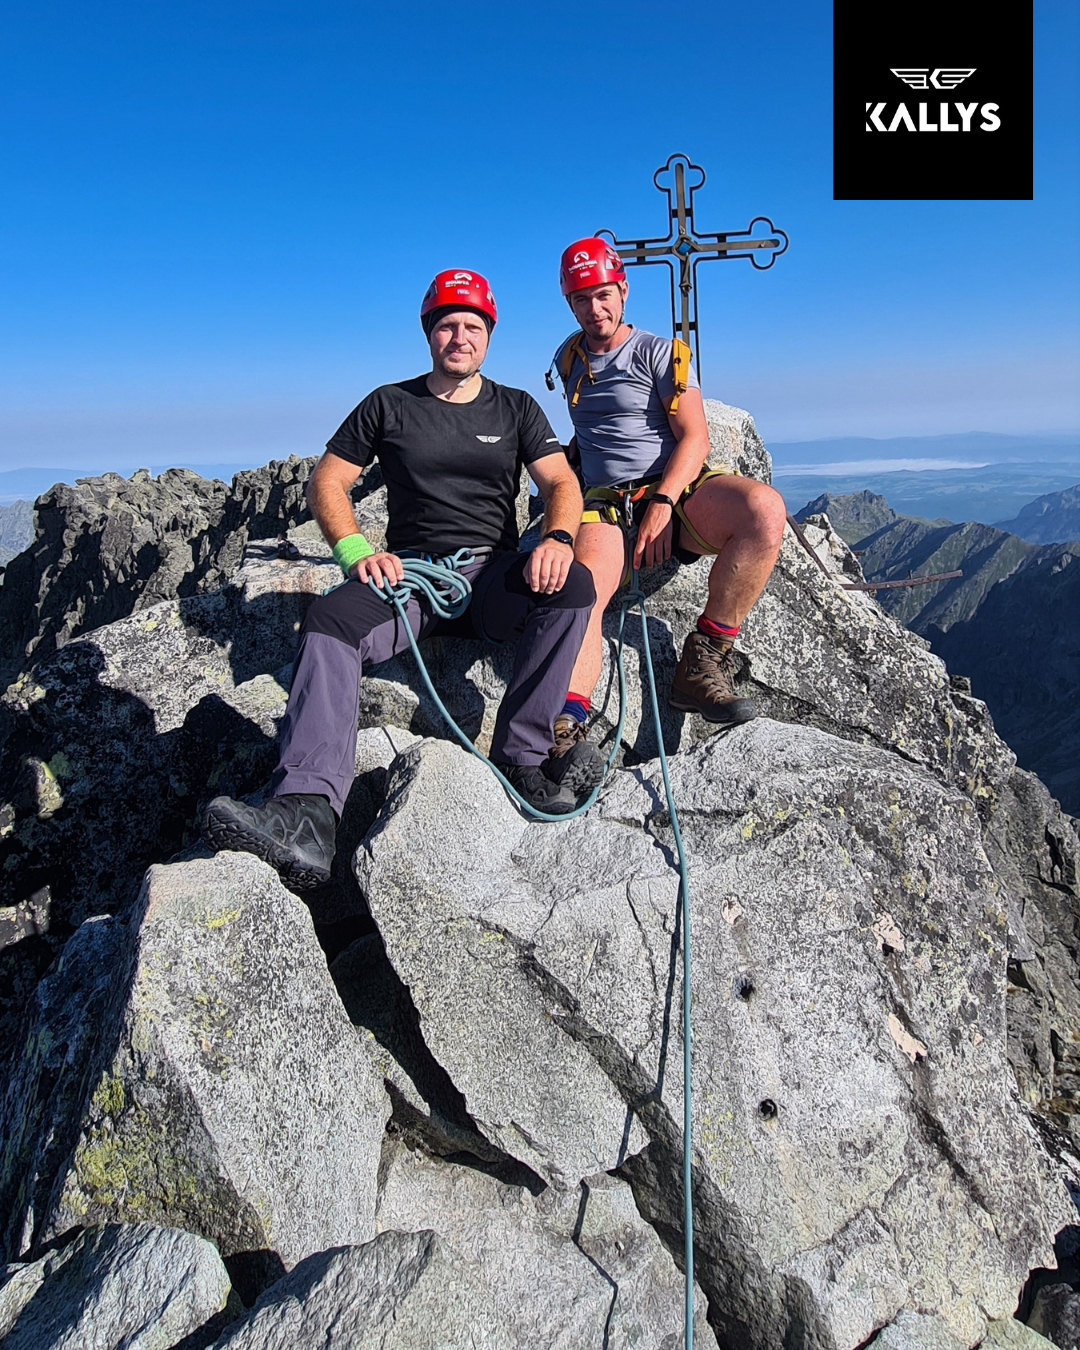 Men in Kallys sport Tshirt reach mountain summit